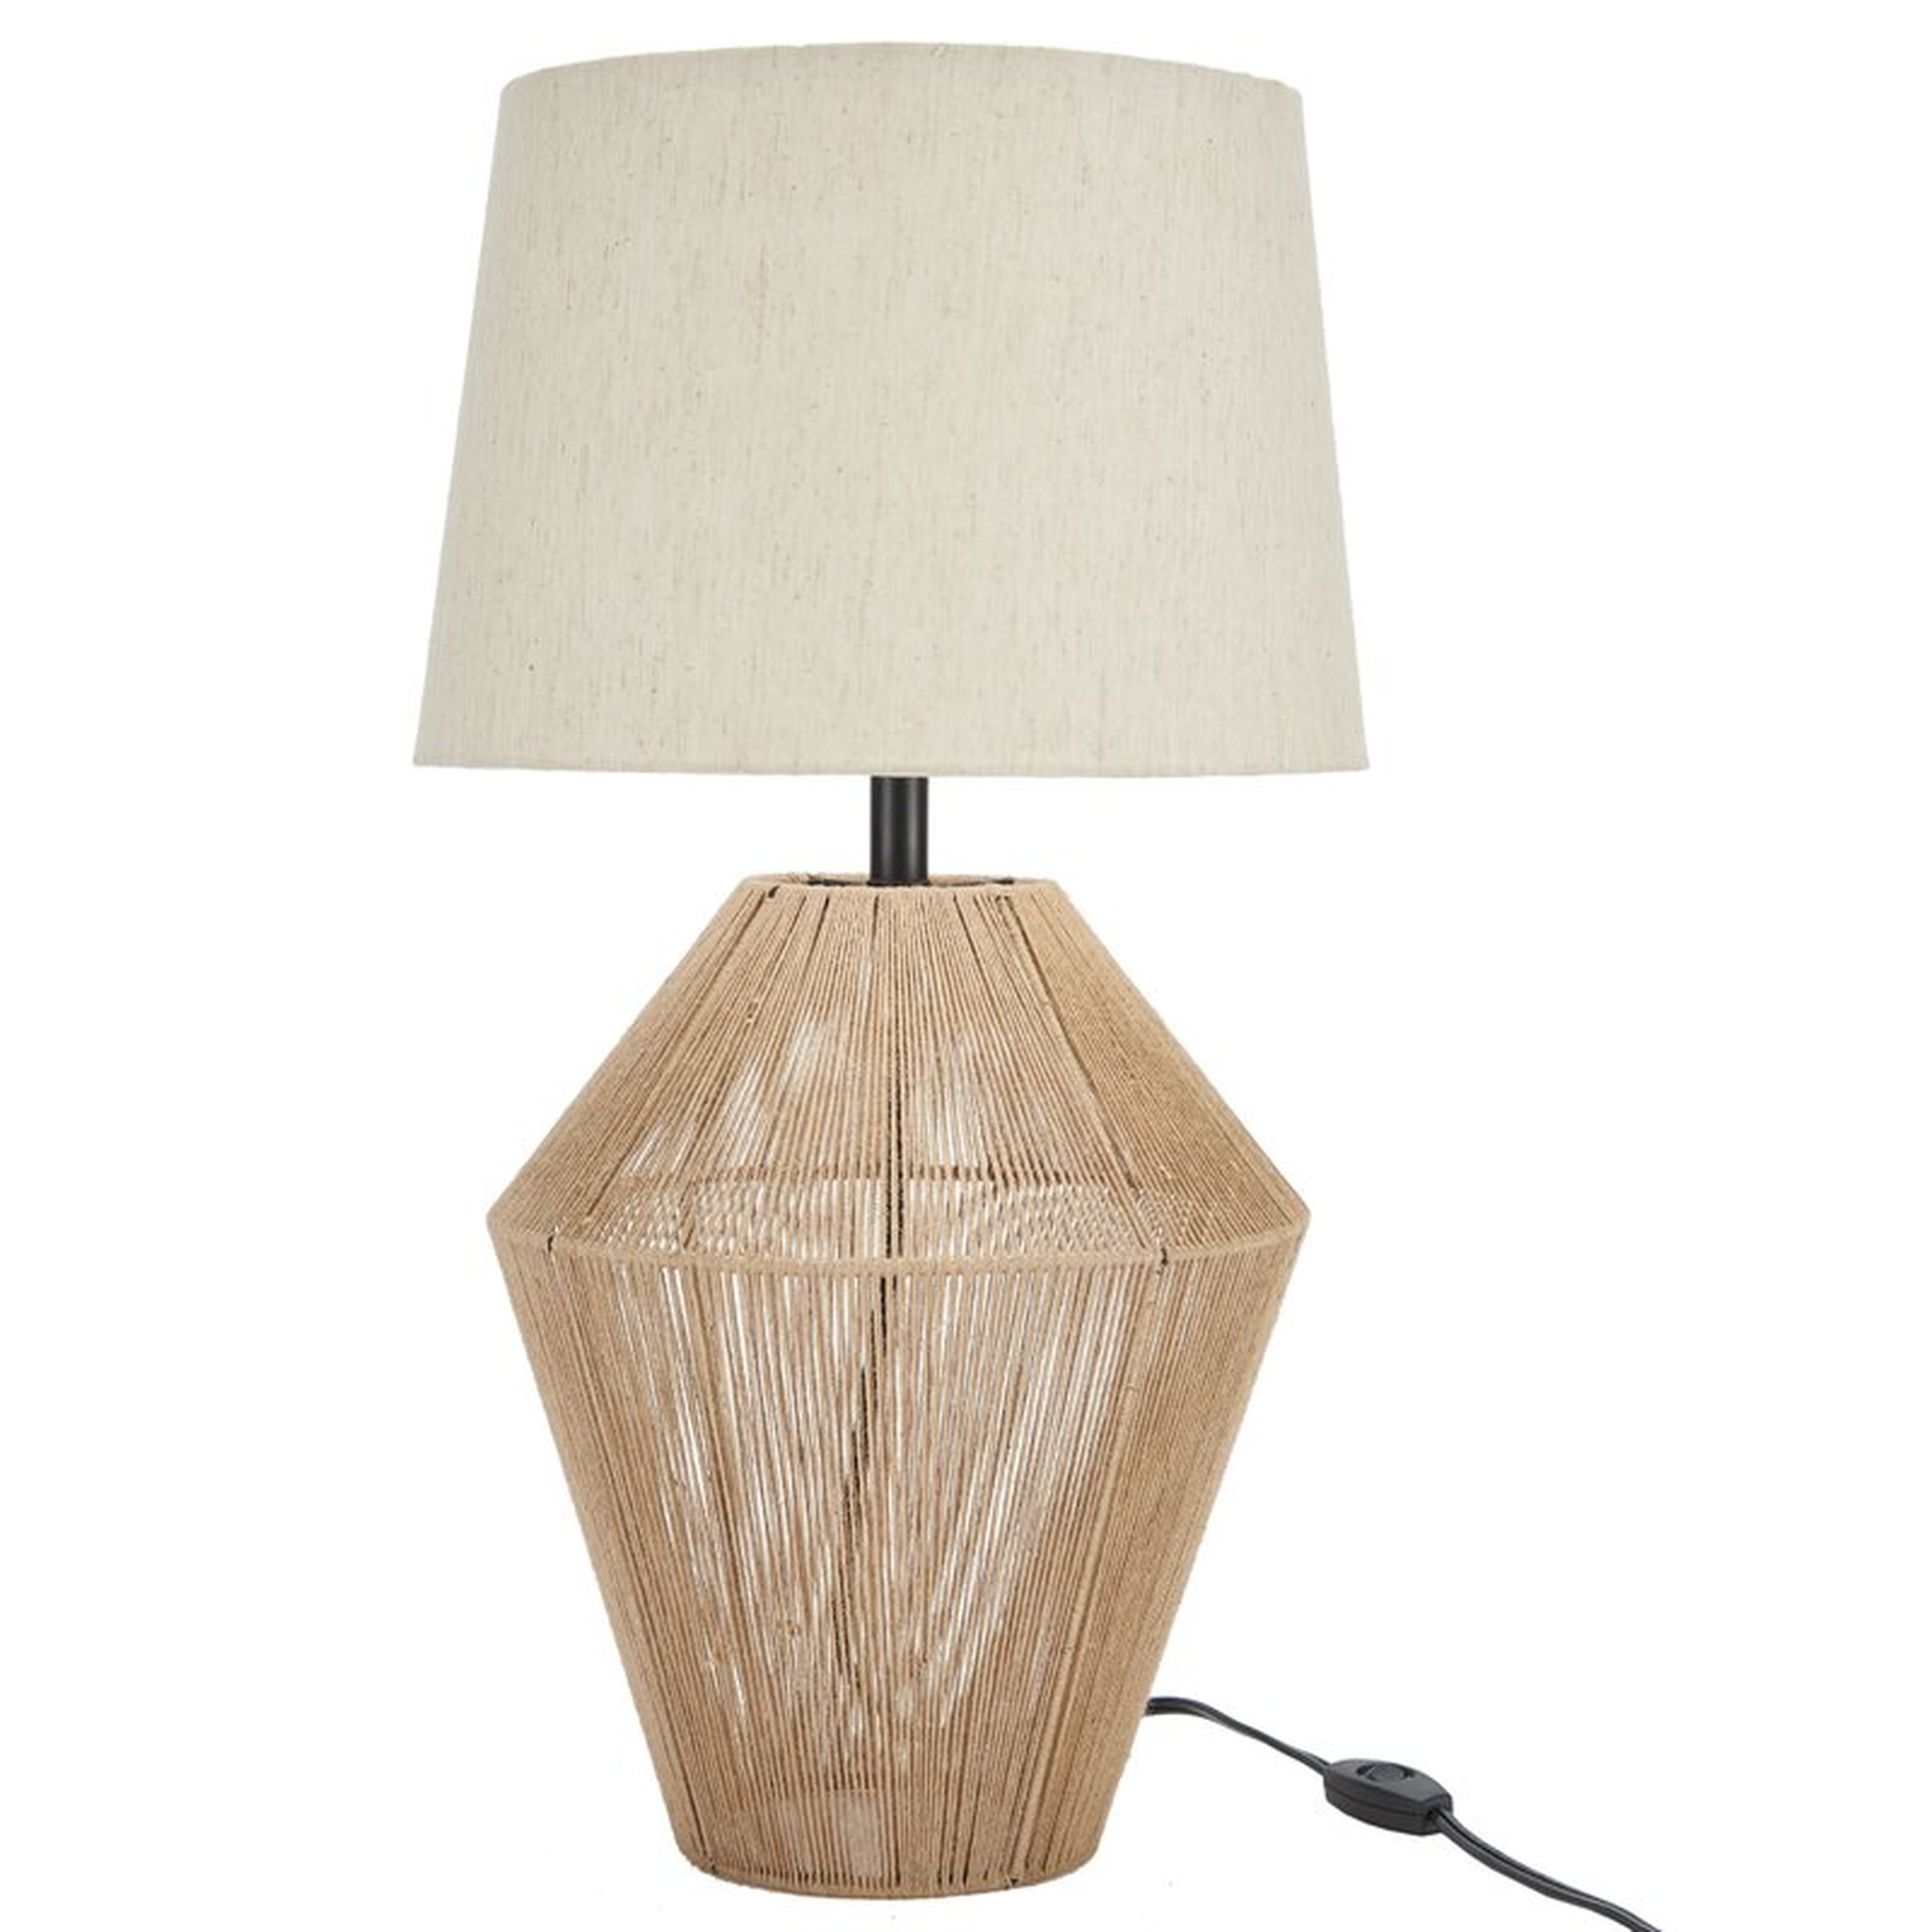 Natural Woven Jute Table Lamp - Wayfair